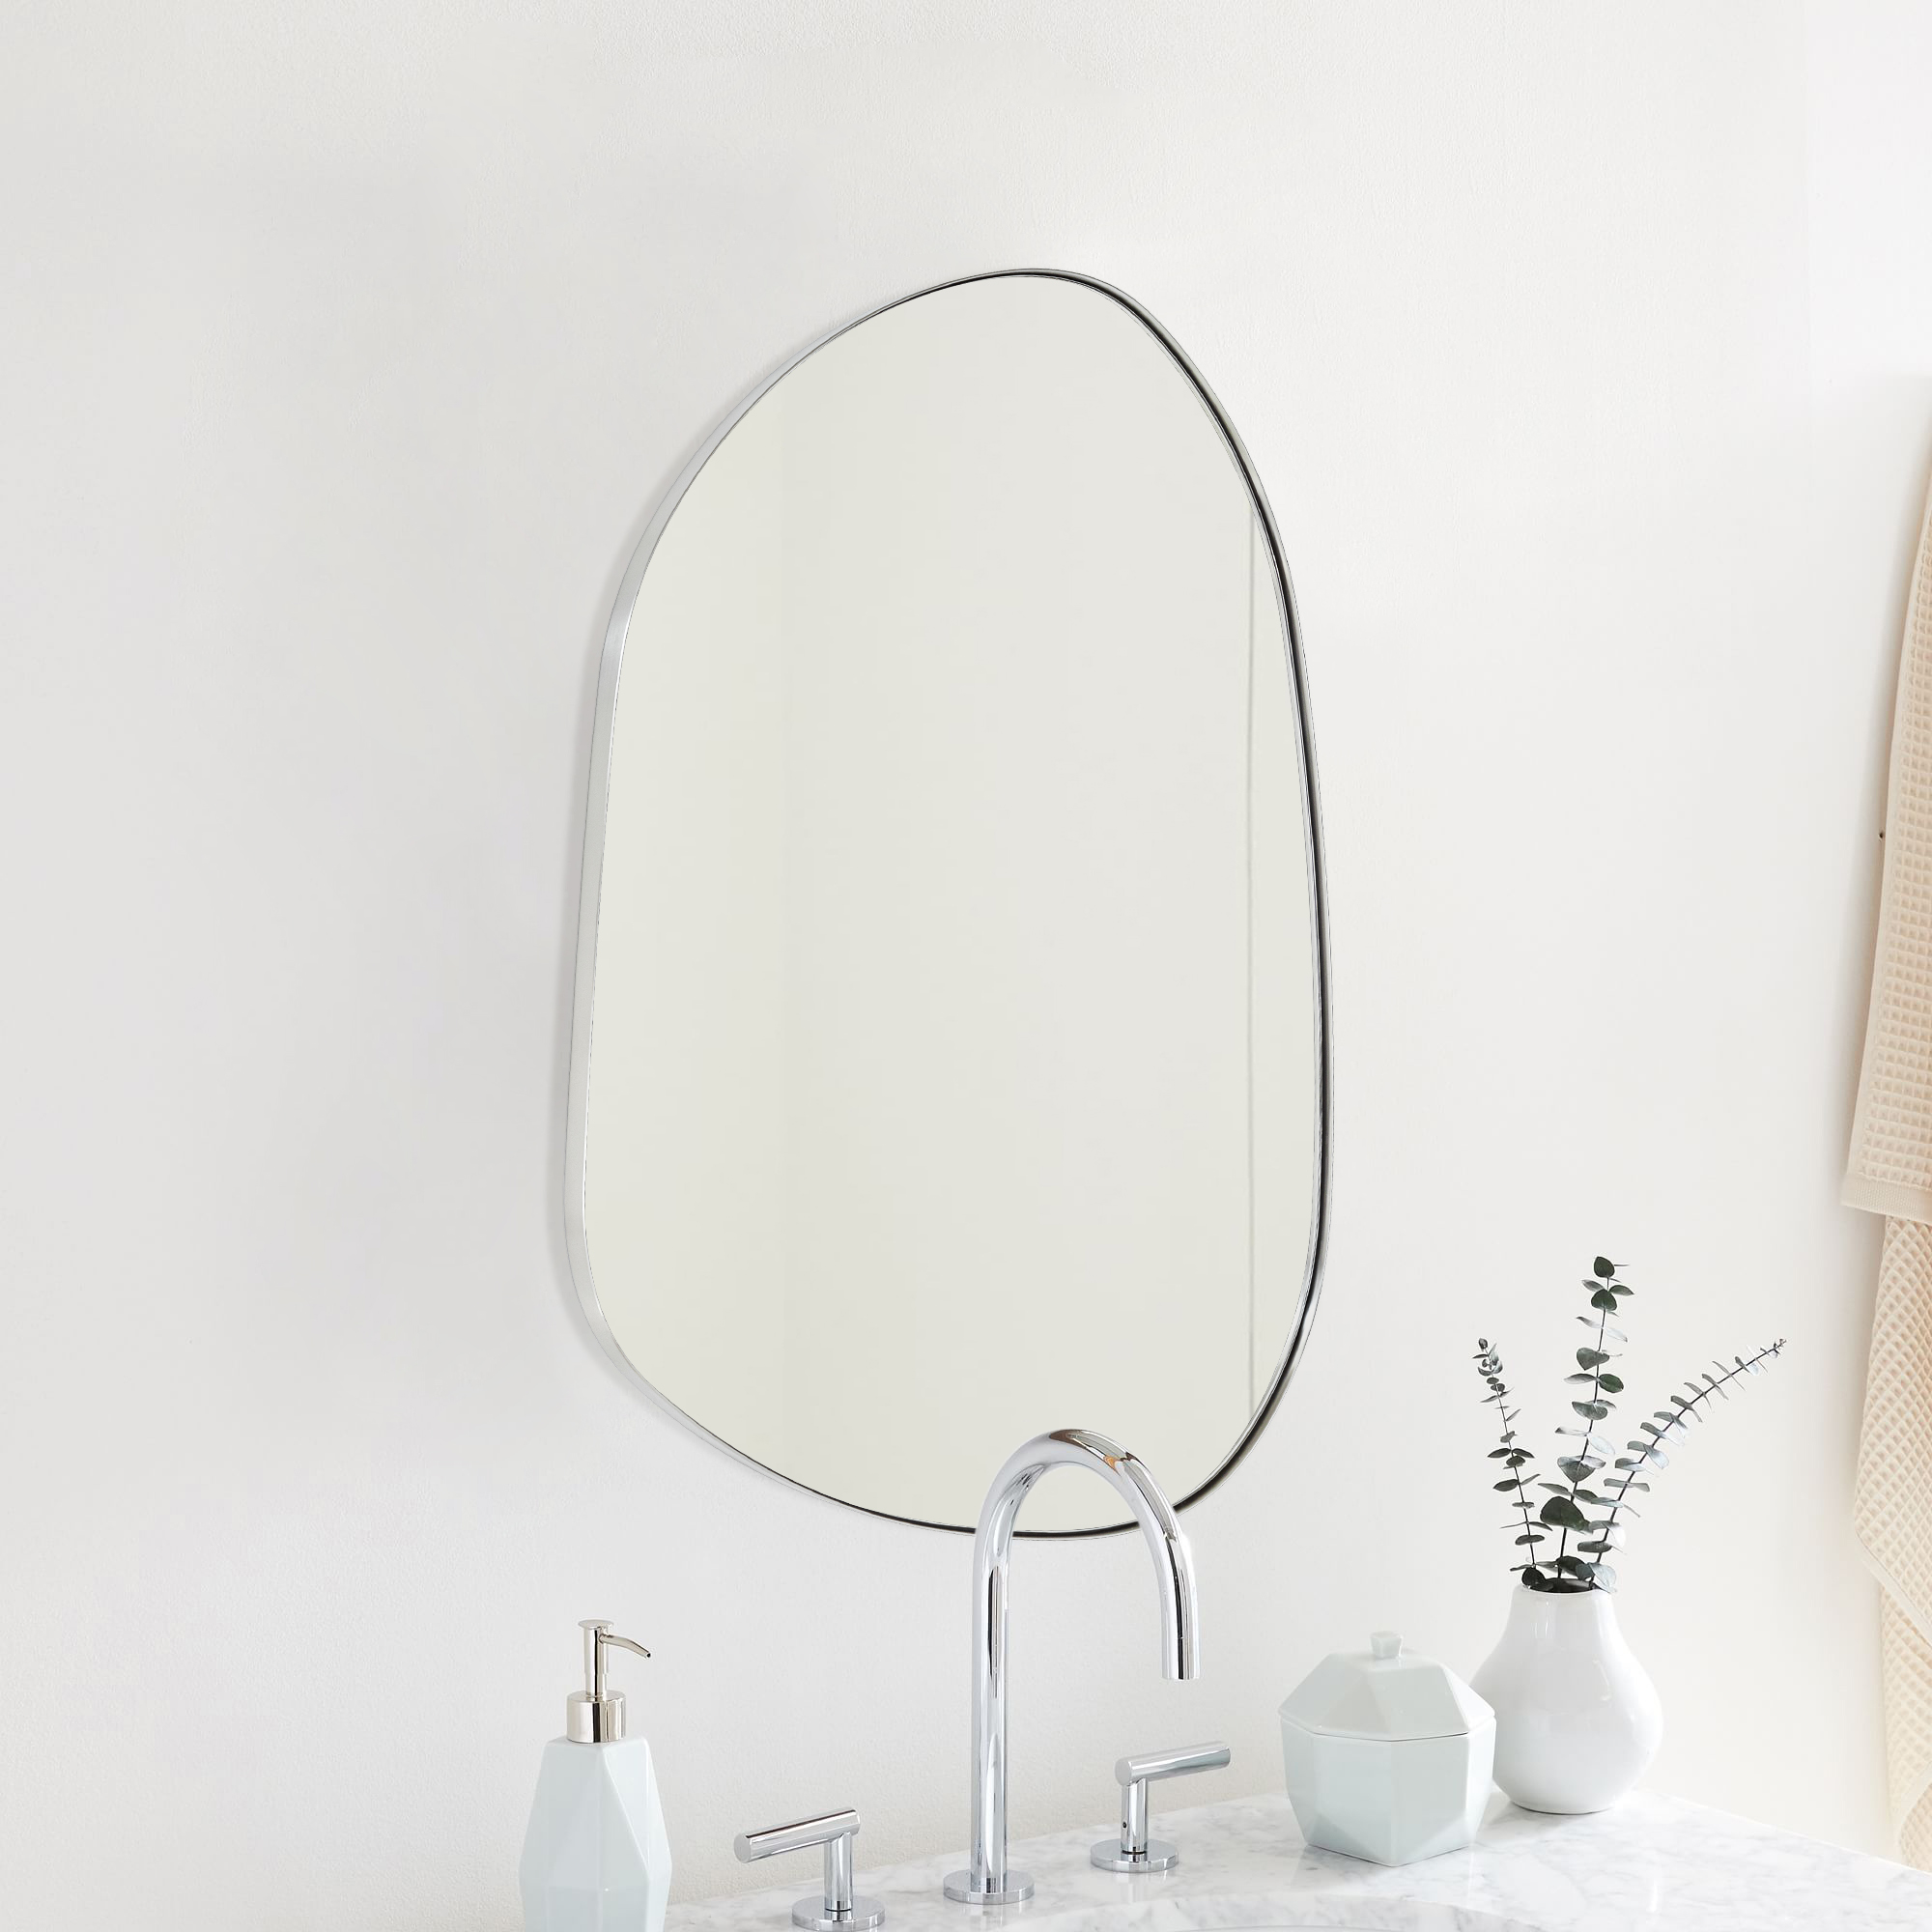 Bertlinde asymmetrical wall mirror irregular shaped mirror for living room, bathroom or entry-30x22-Brushed Nickel